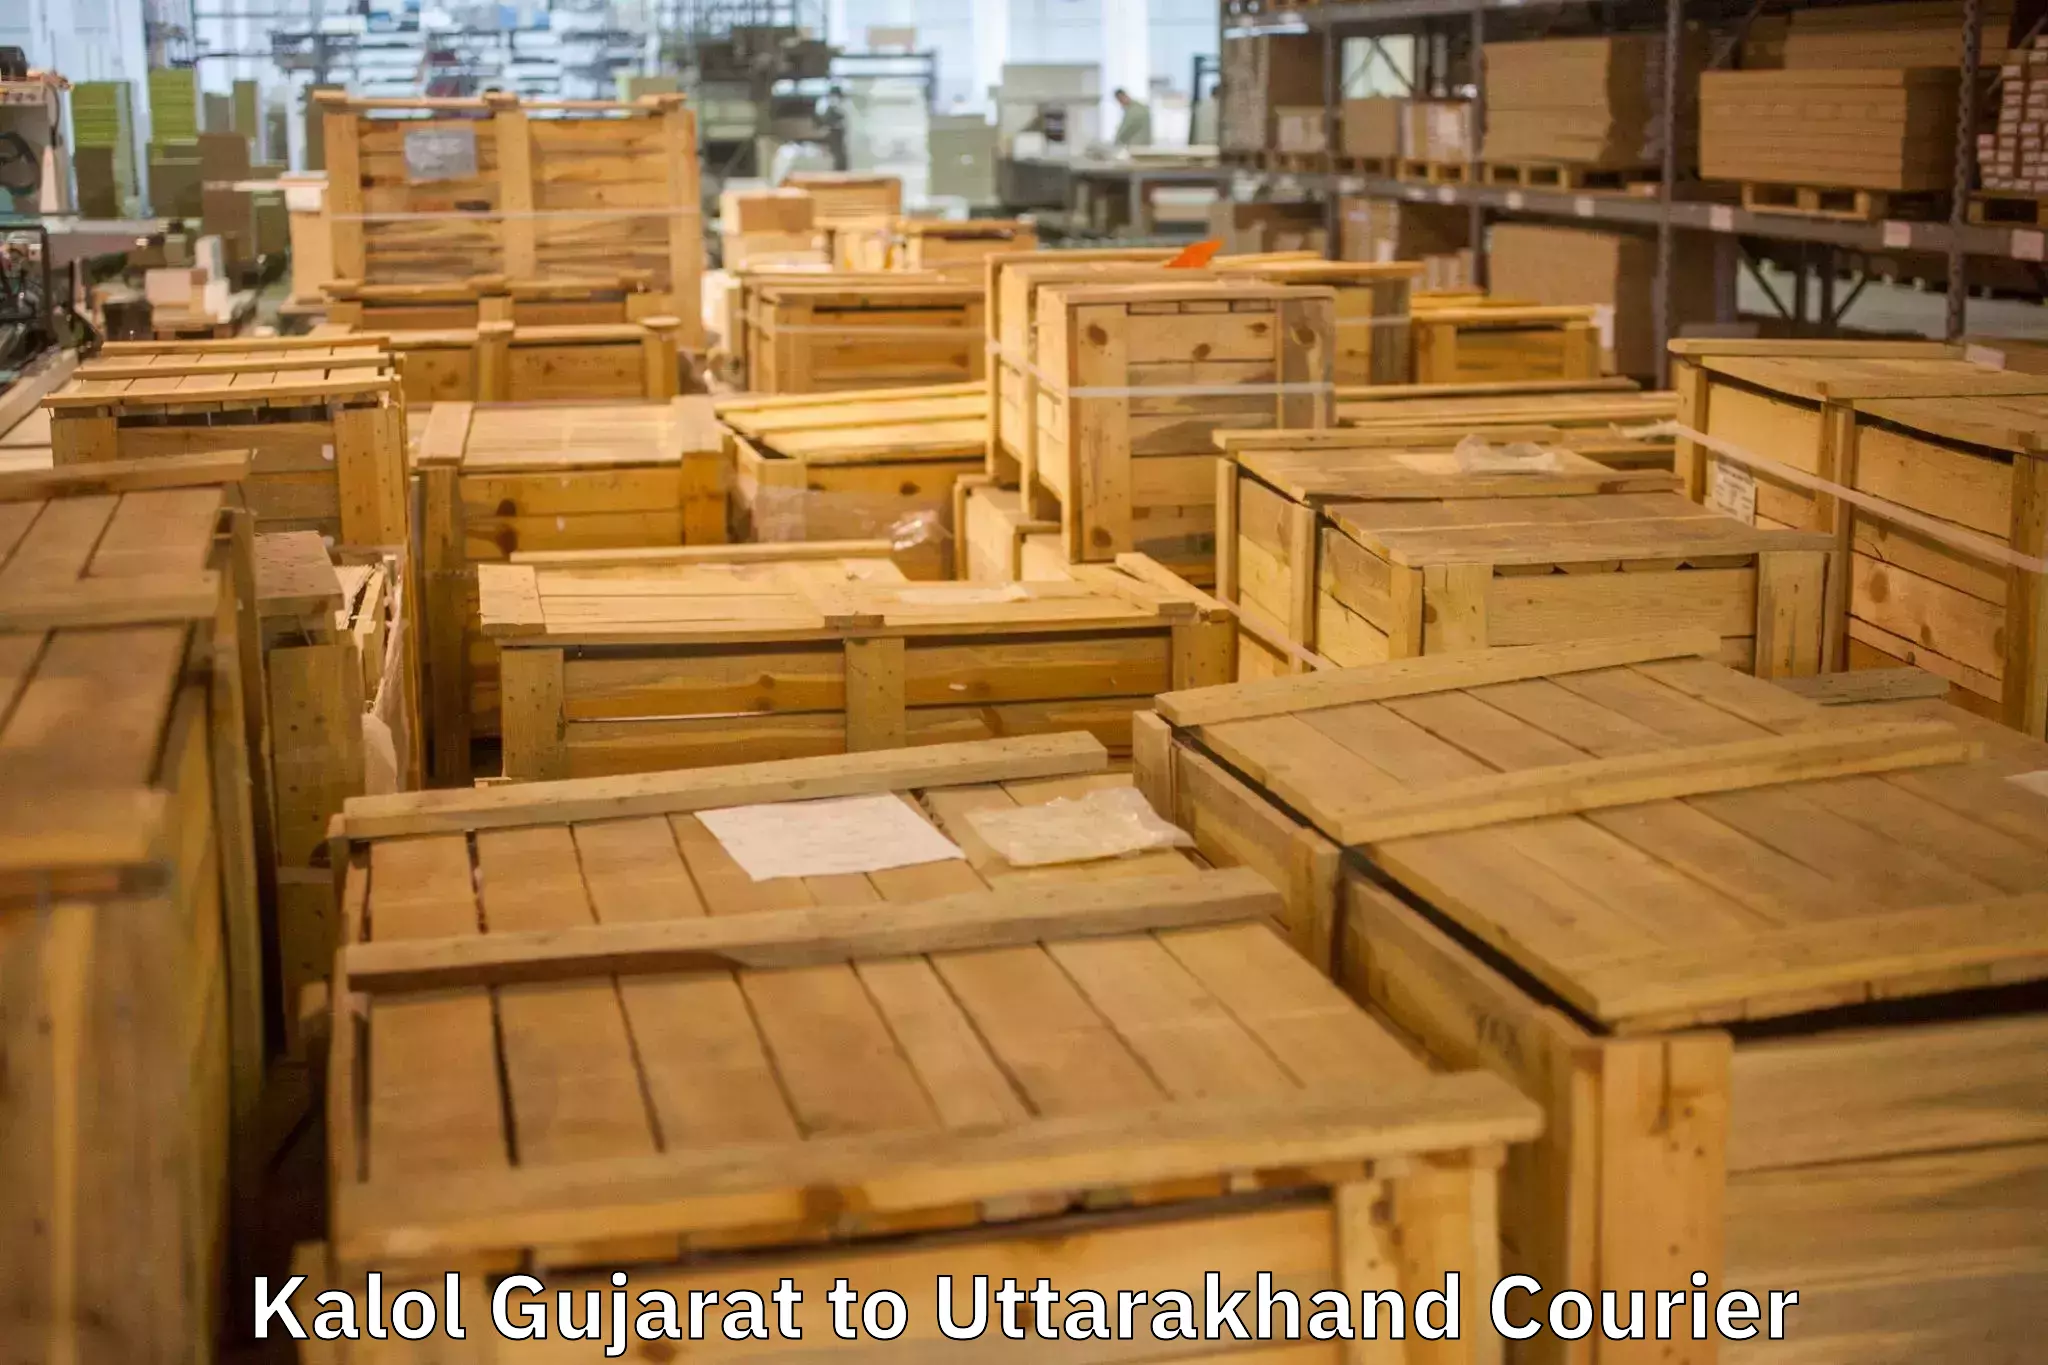 Trusted moving company Kalol Gujarat to Bhimtal